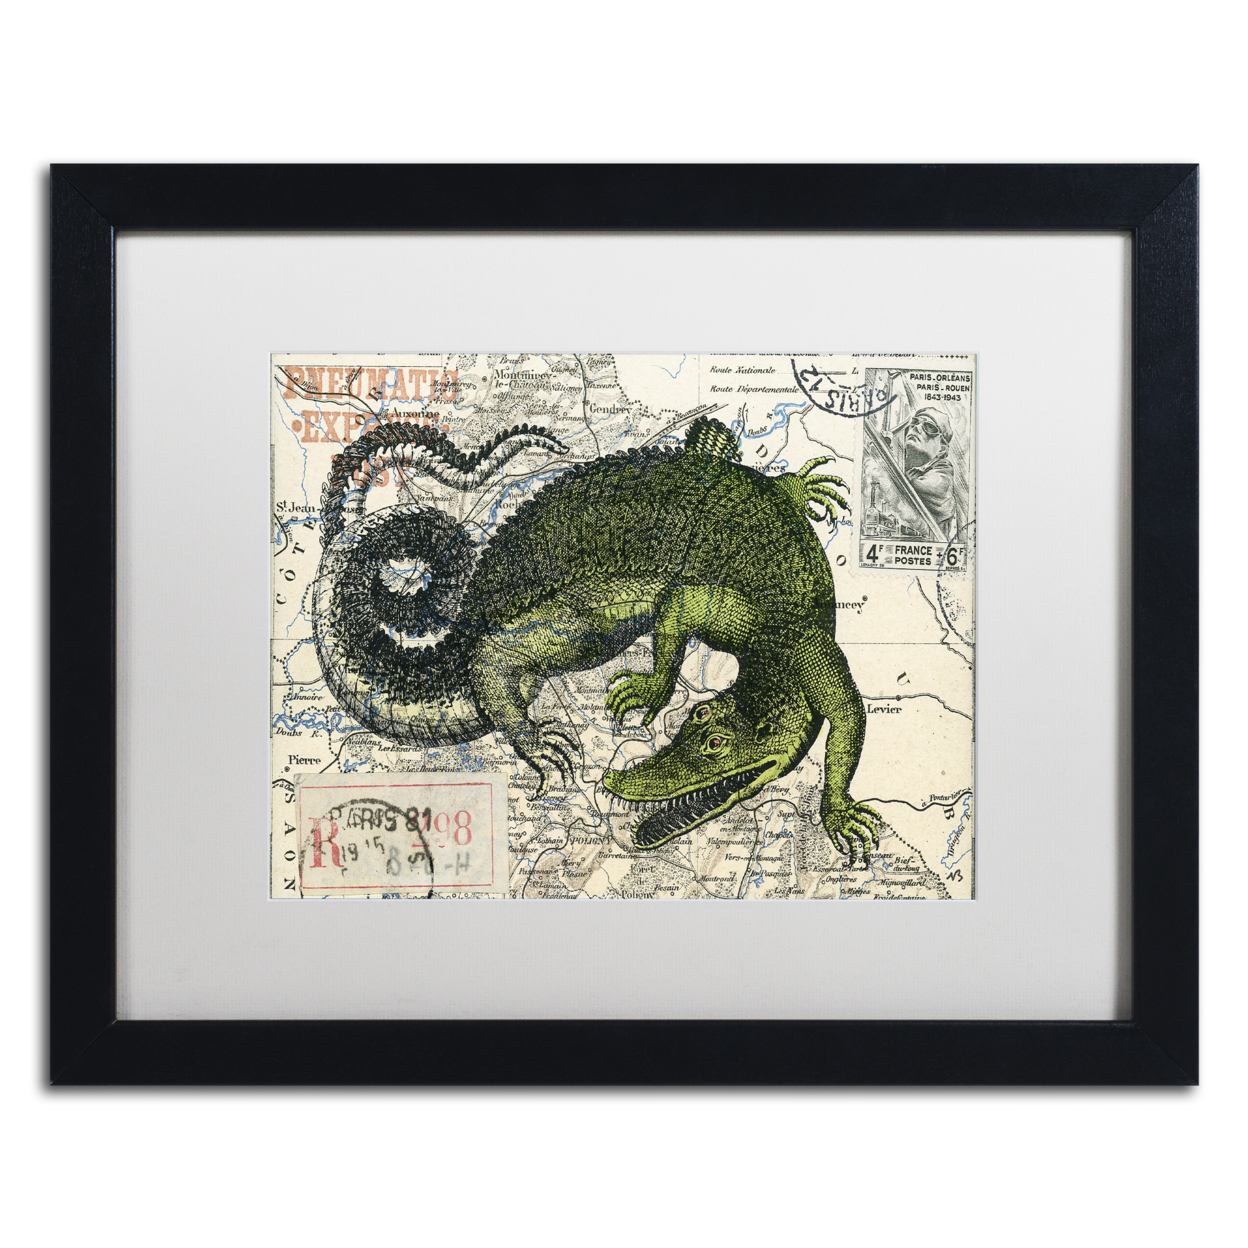 Nick Bantock 'Croc Map' Black Wooden Framed Art 18 X 22 Inches